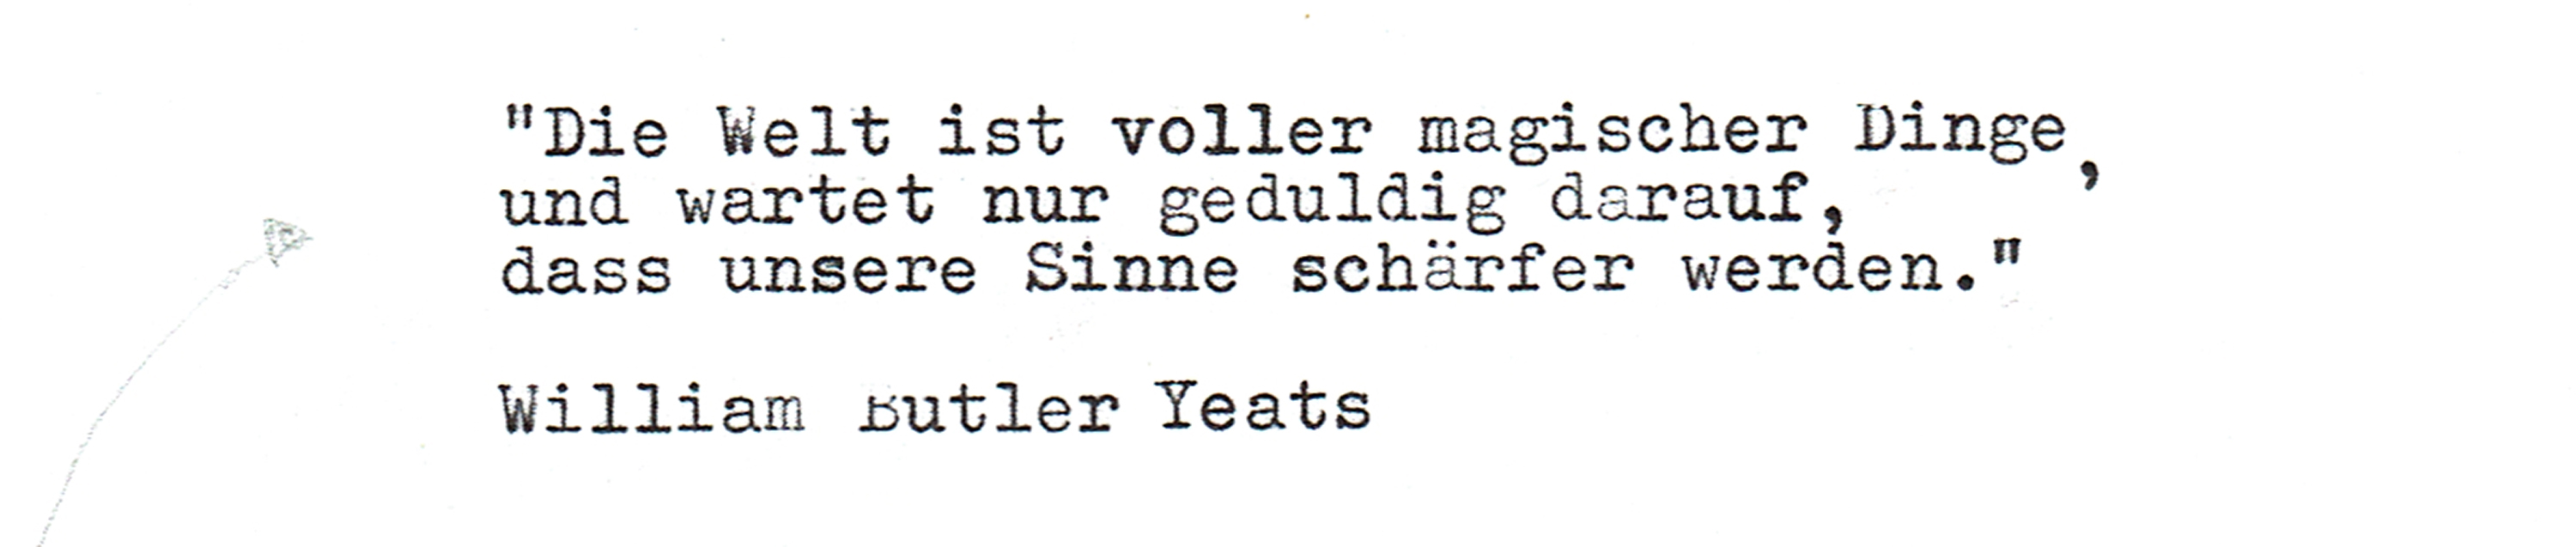 Yeats dt...jpg